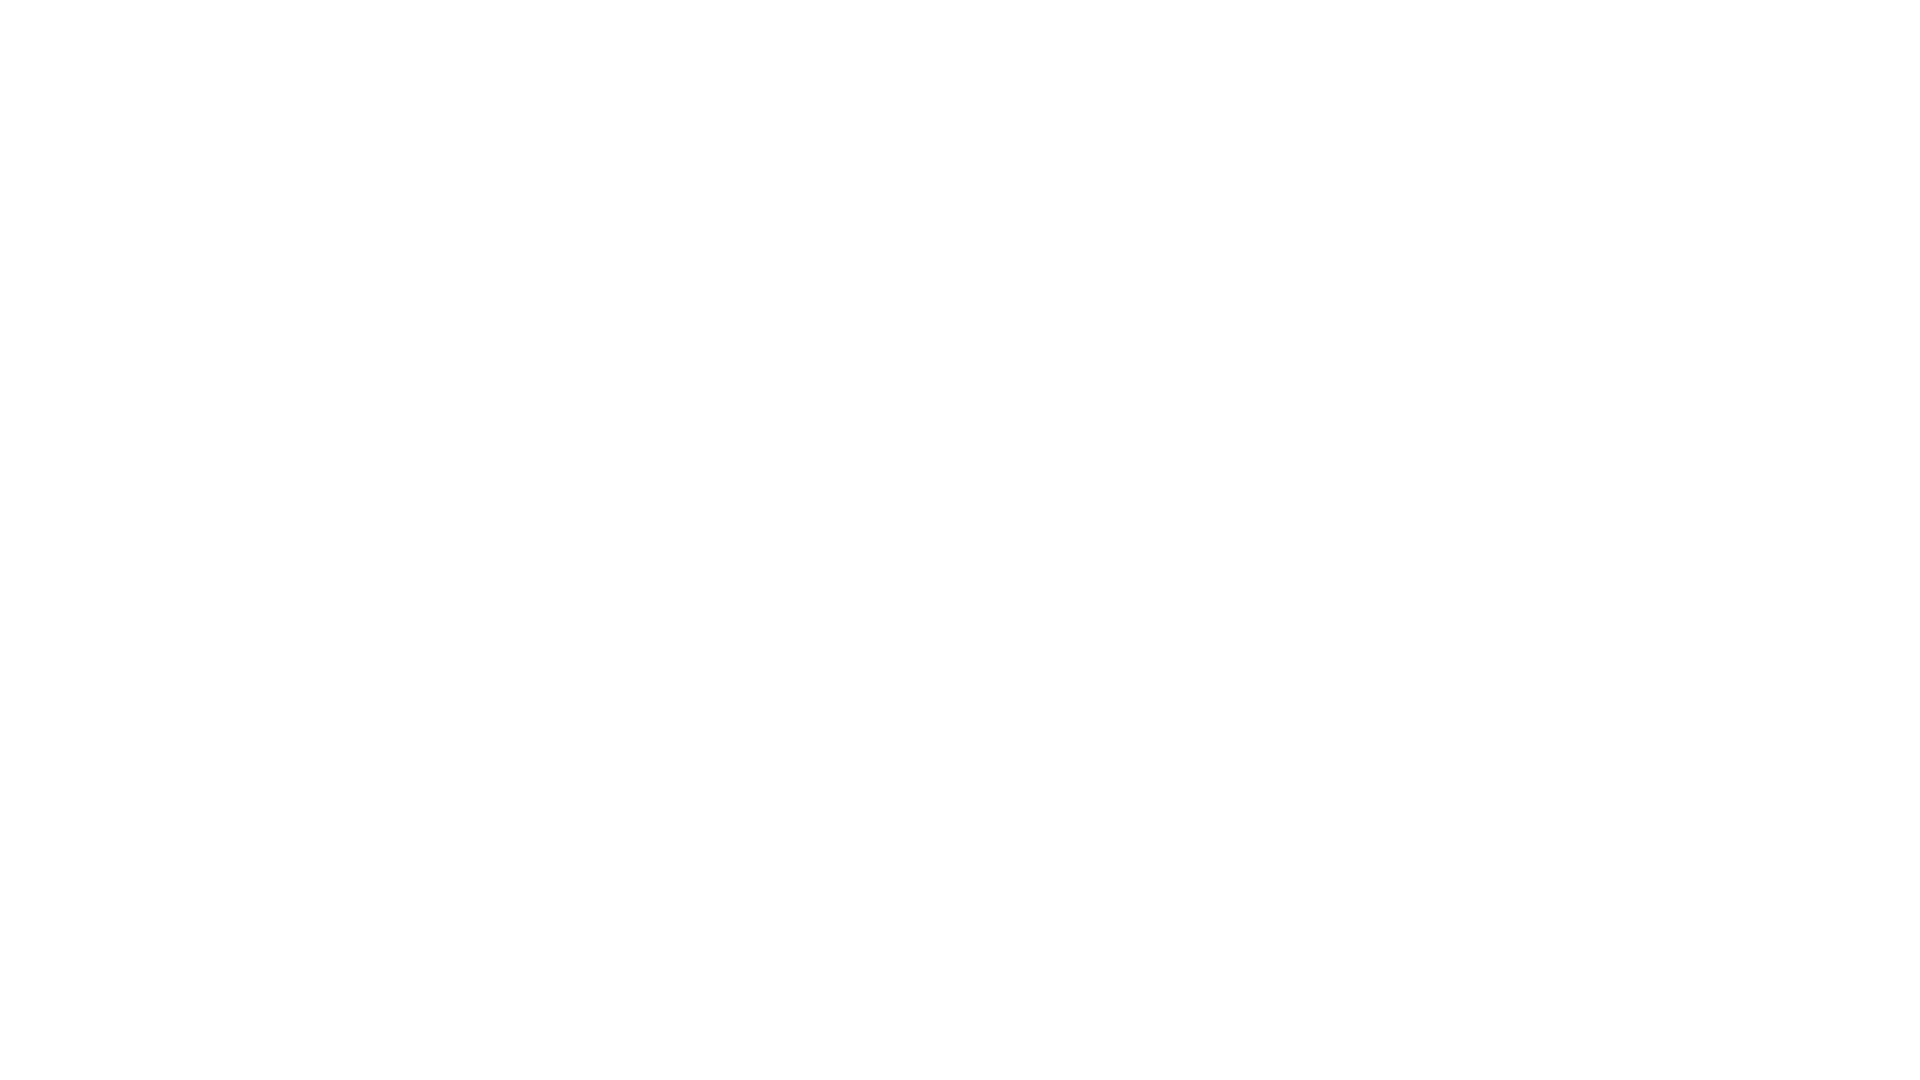 THE LONGEST RIDE (A FORMAT)